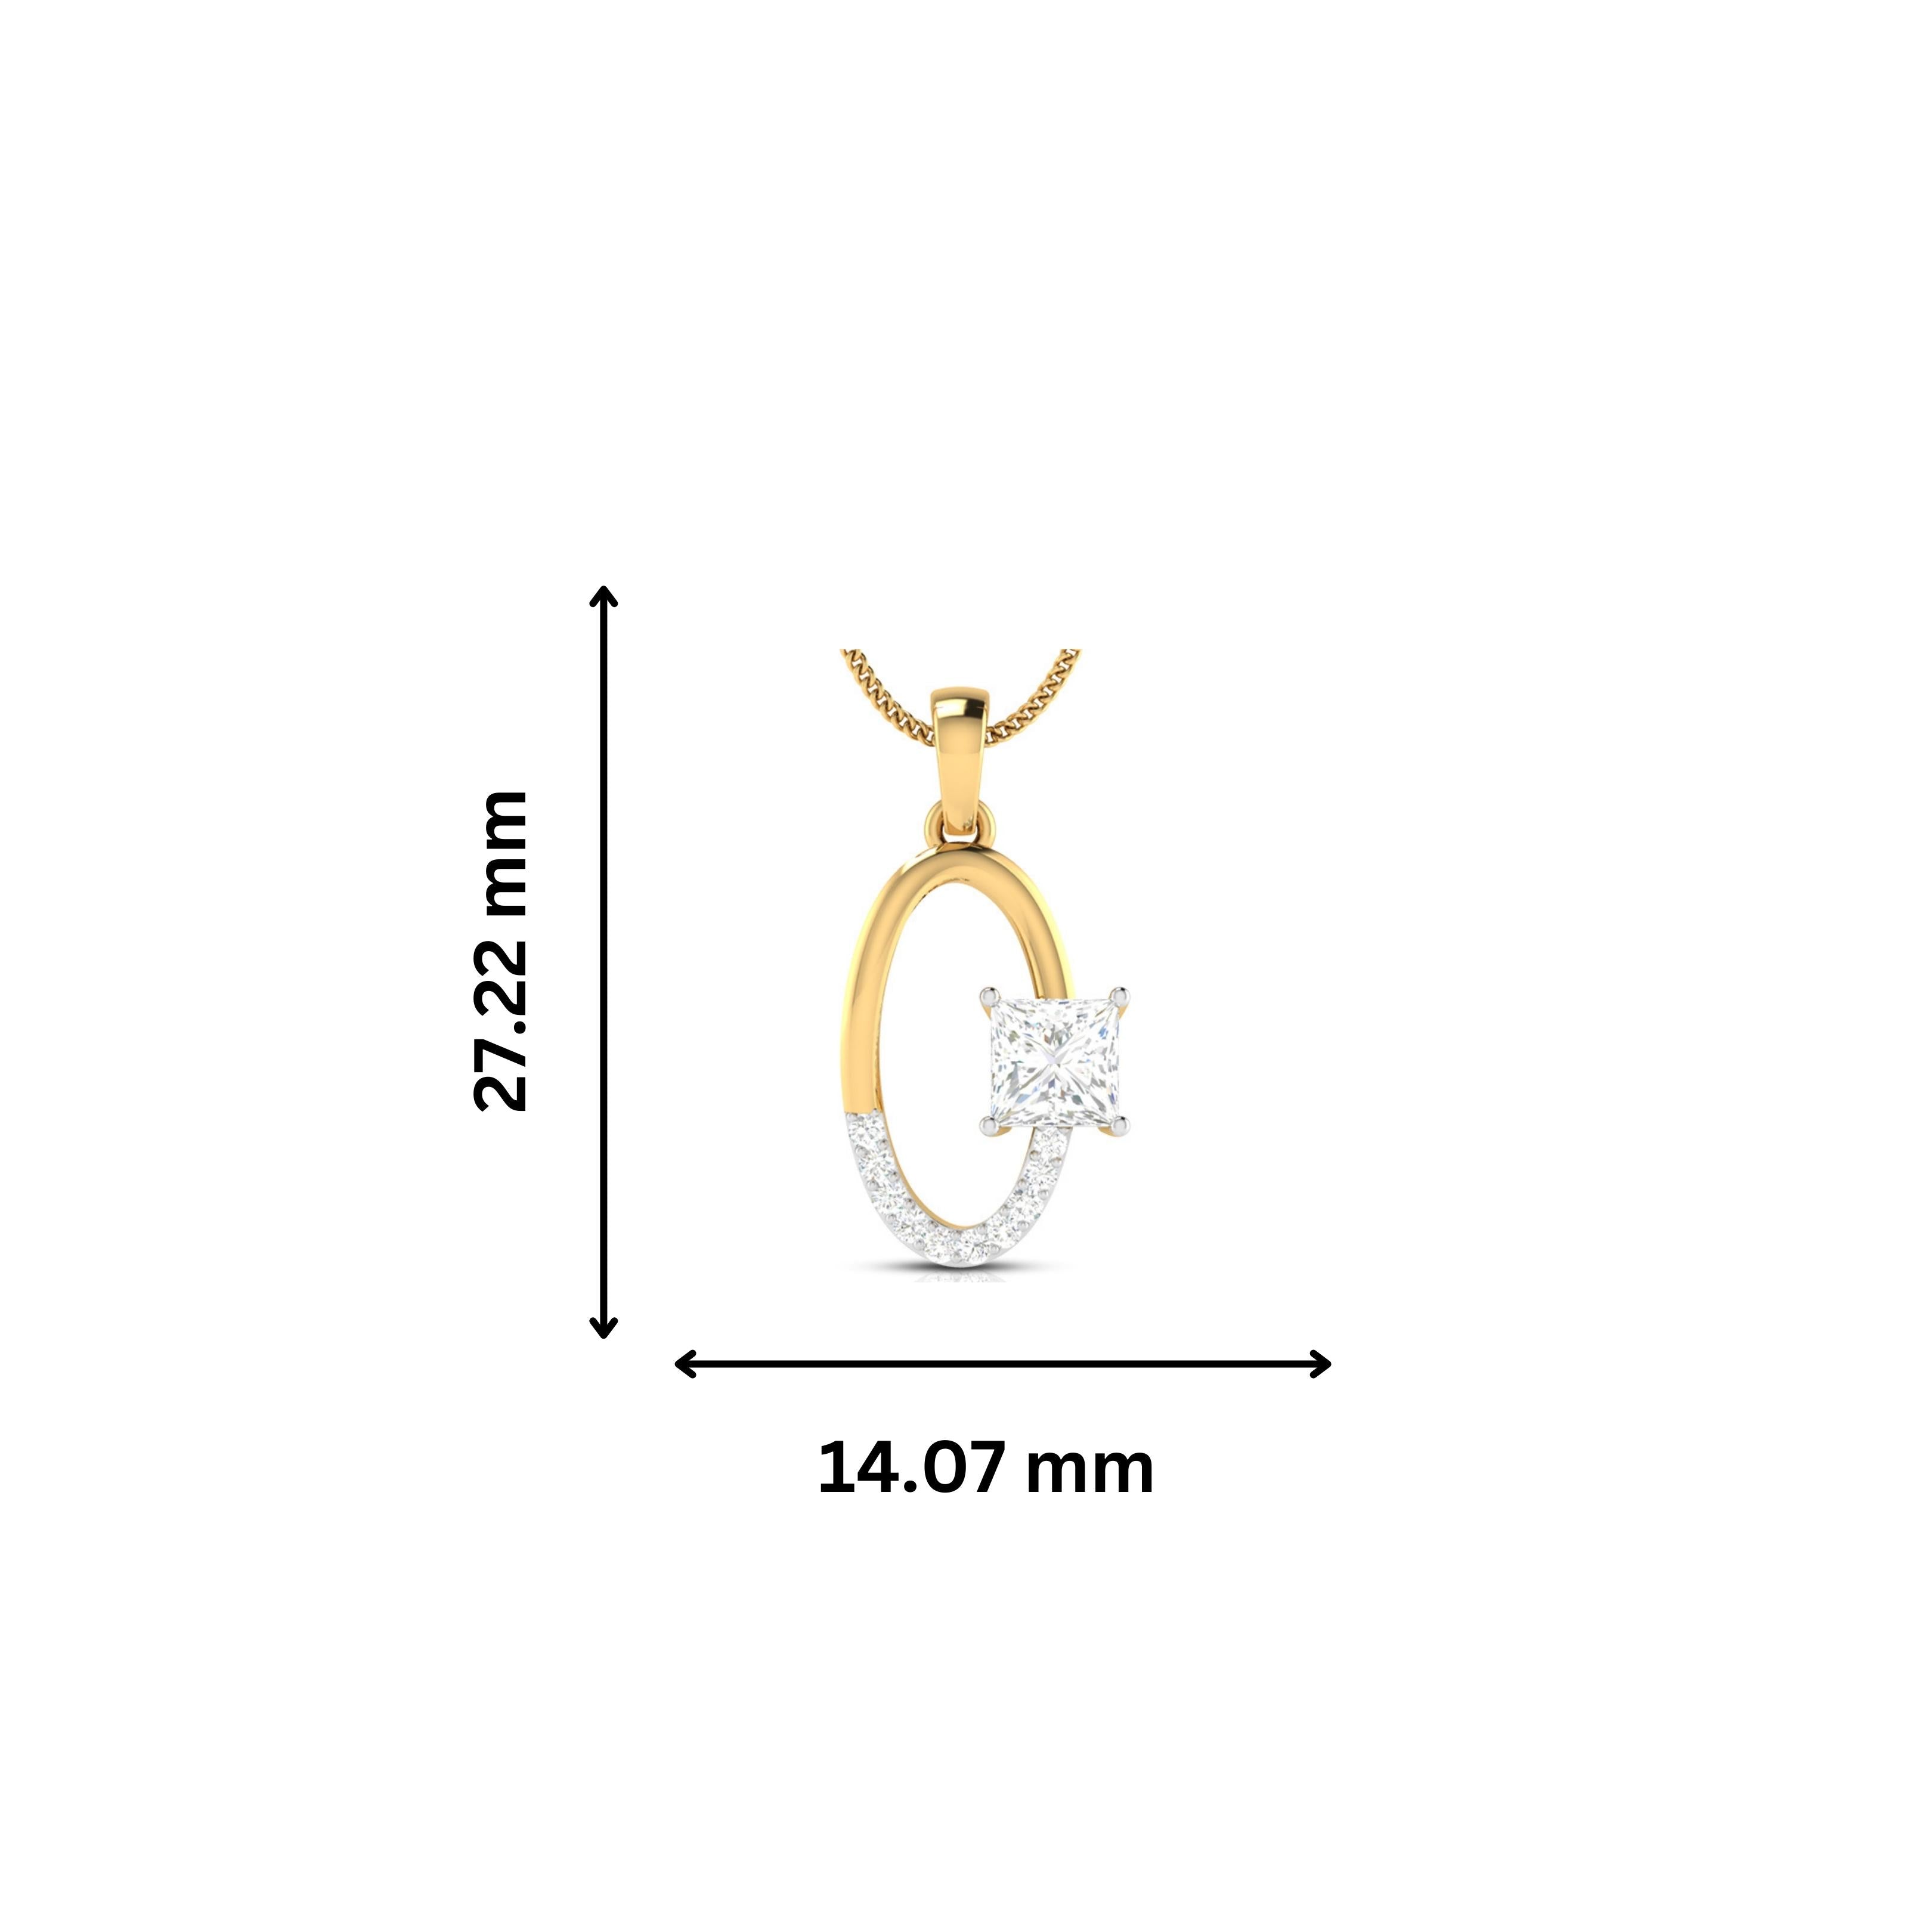 Menace lab grown diamond pendant design for women Fiona Diamonds